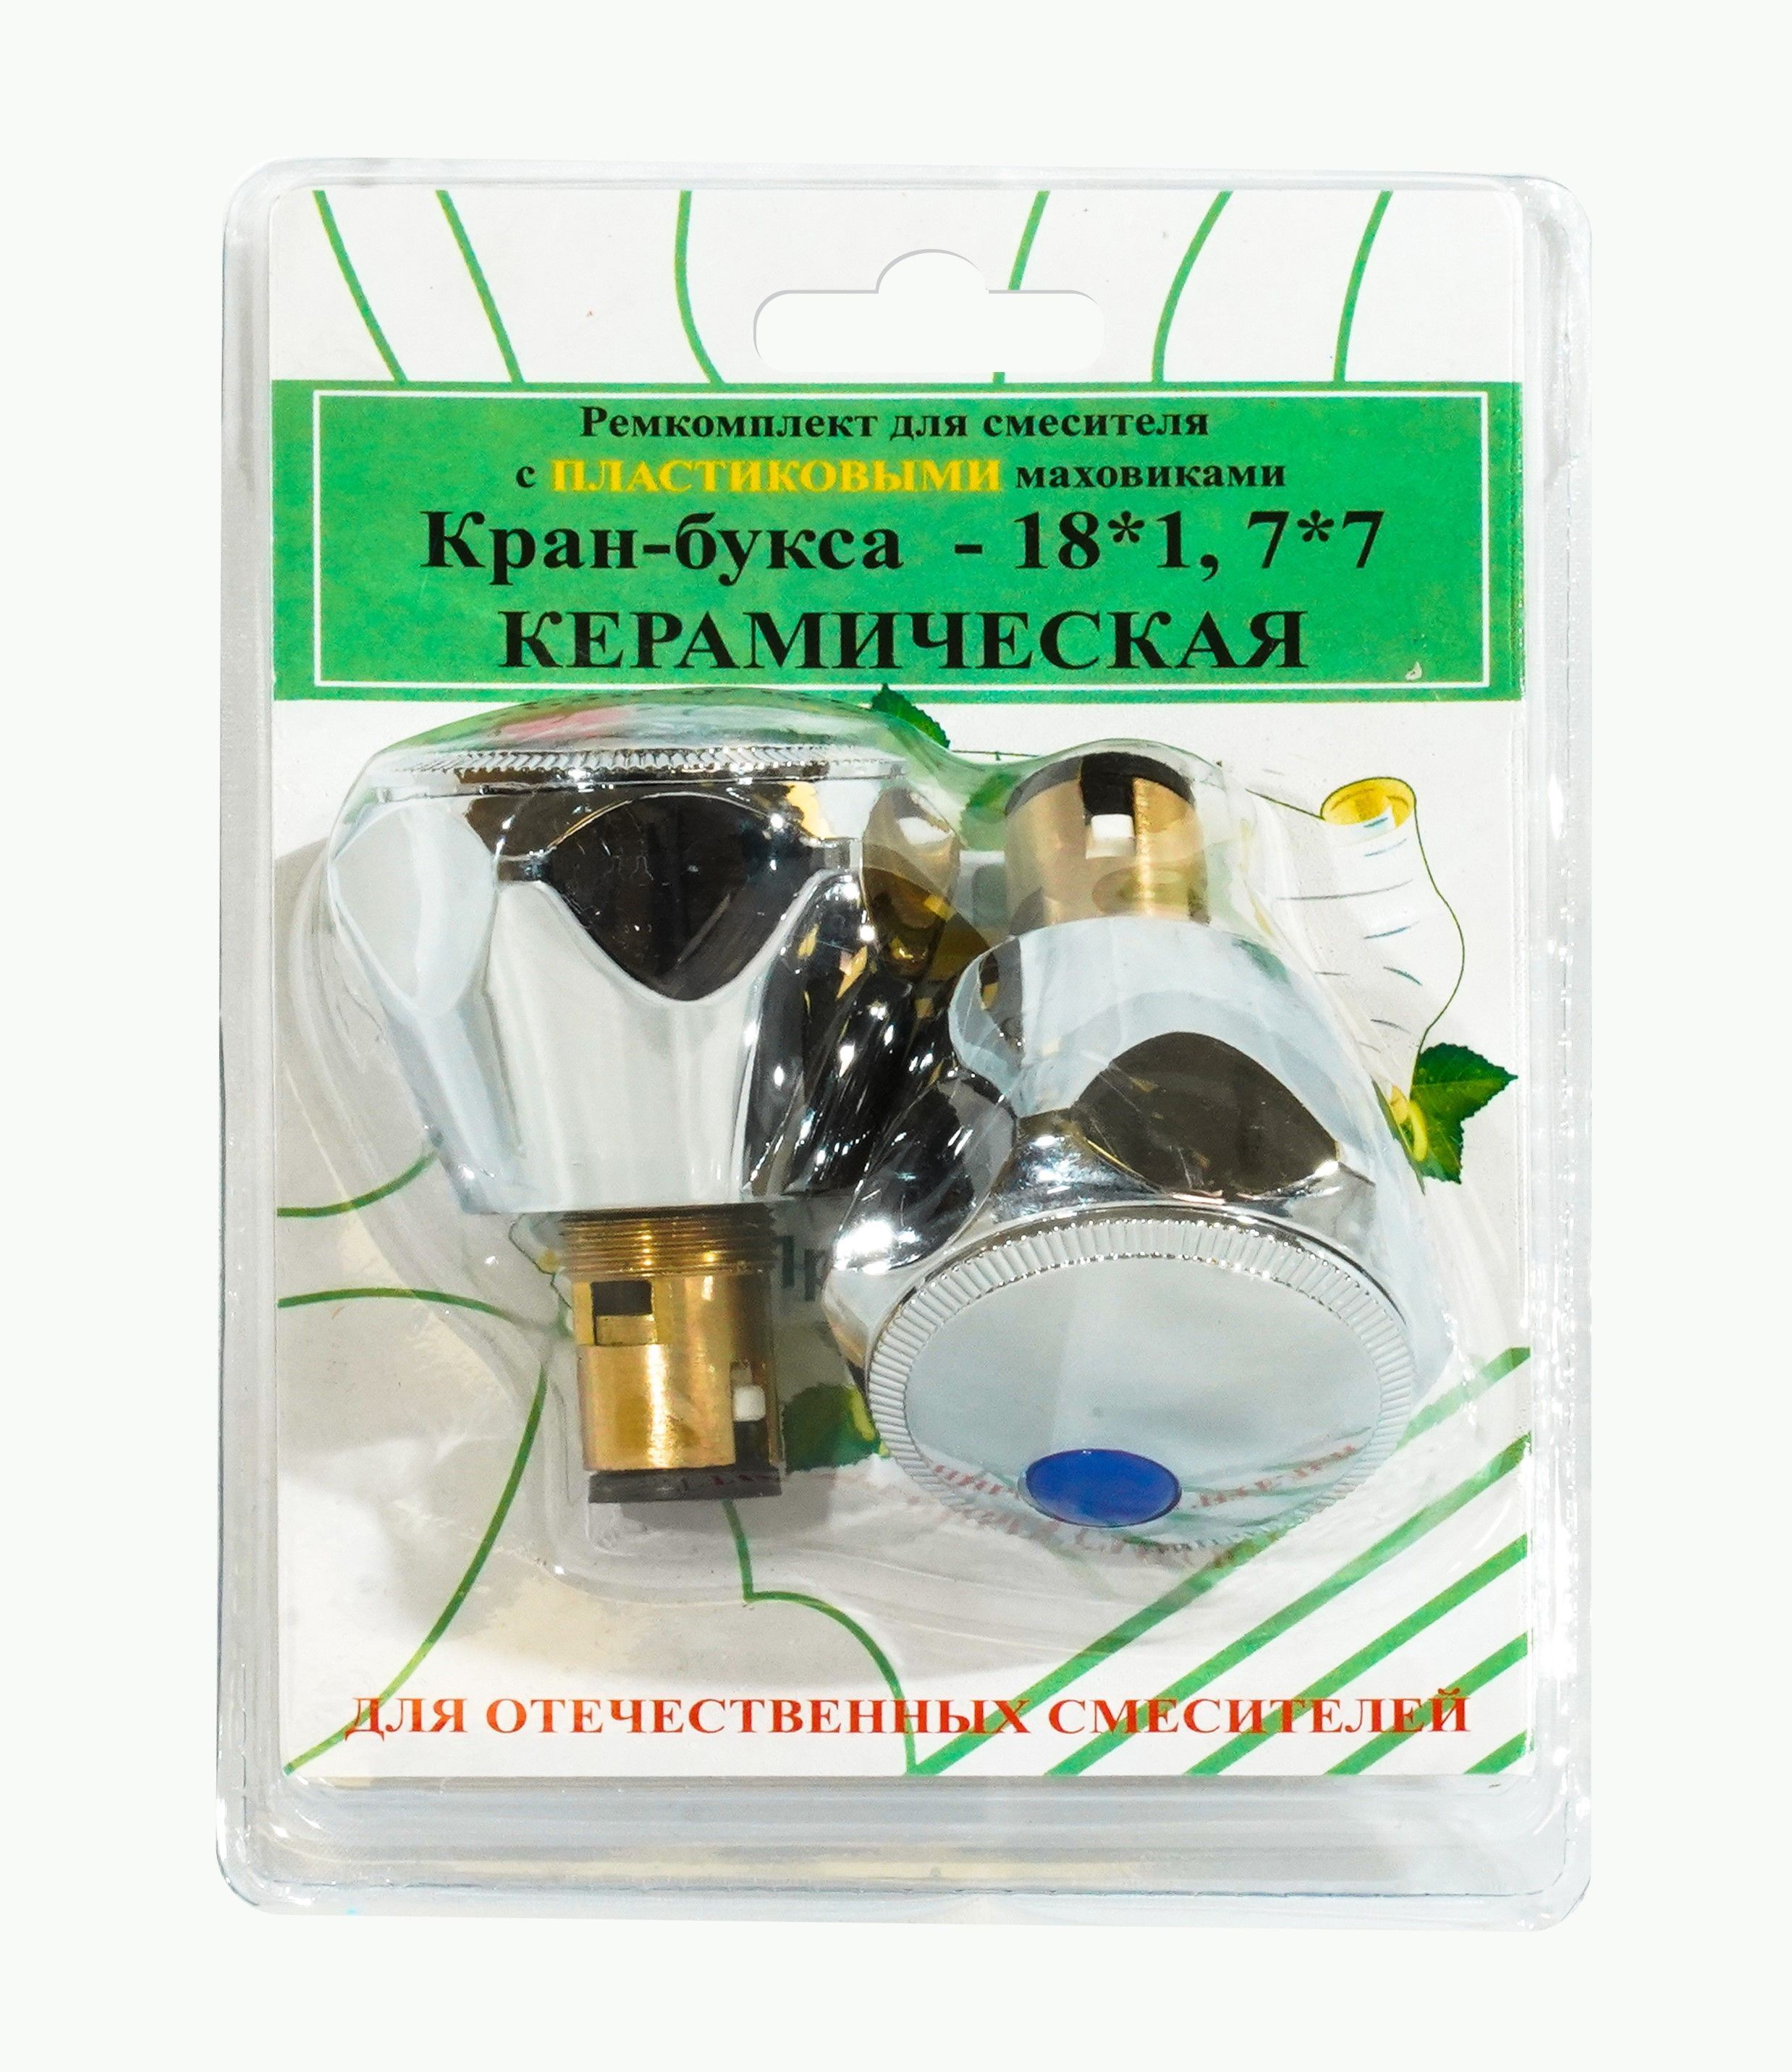 Комплект кран-буксы ПСМ M18х1 7х7 с маховиками (Мария) пластик ПСМ RK-RPM - фото 1